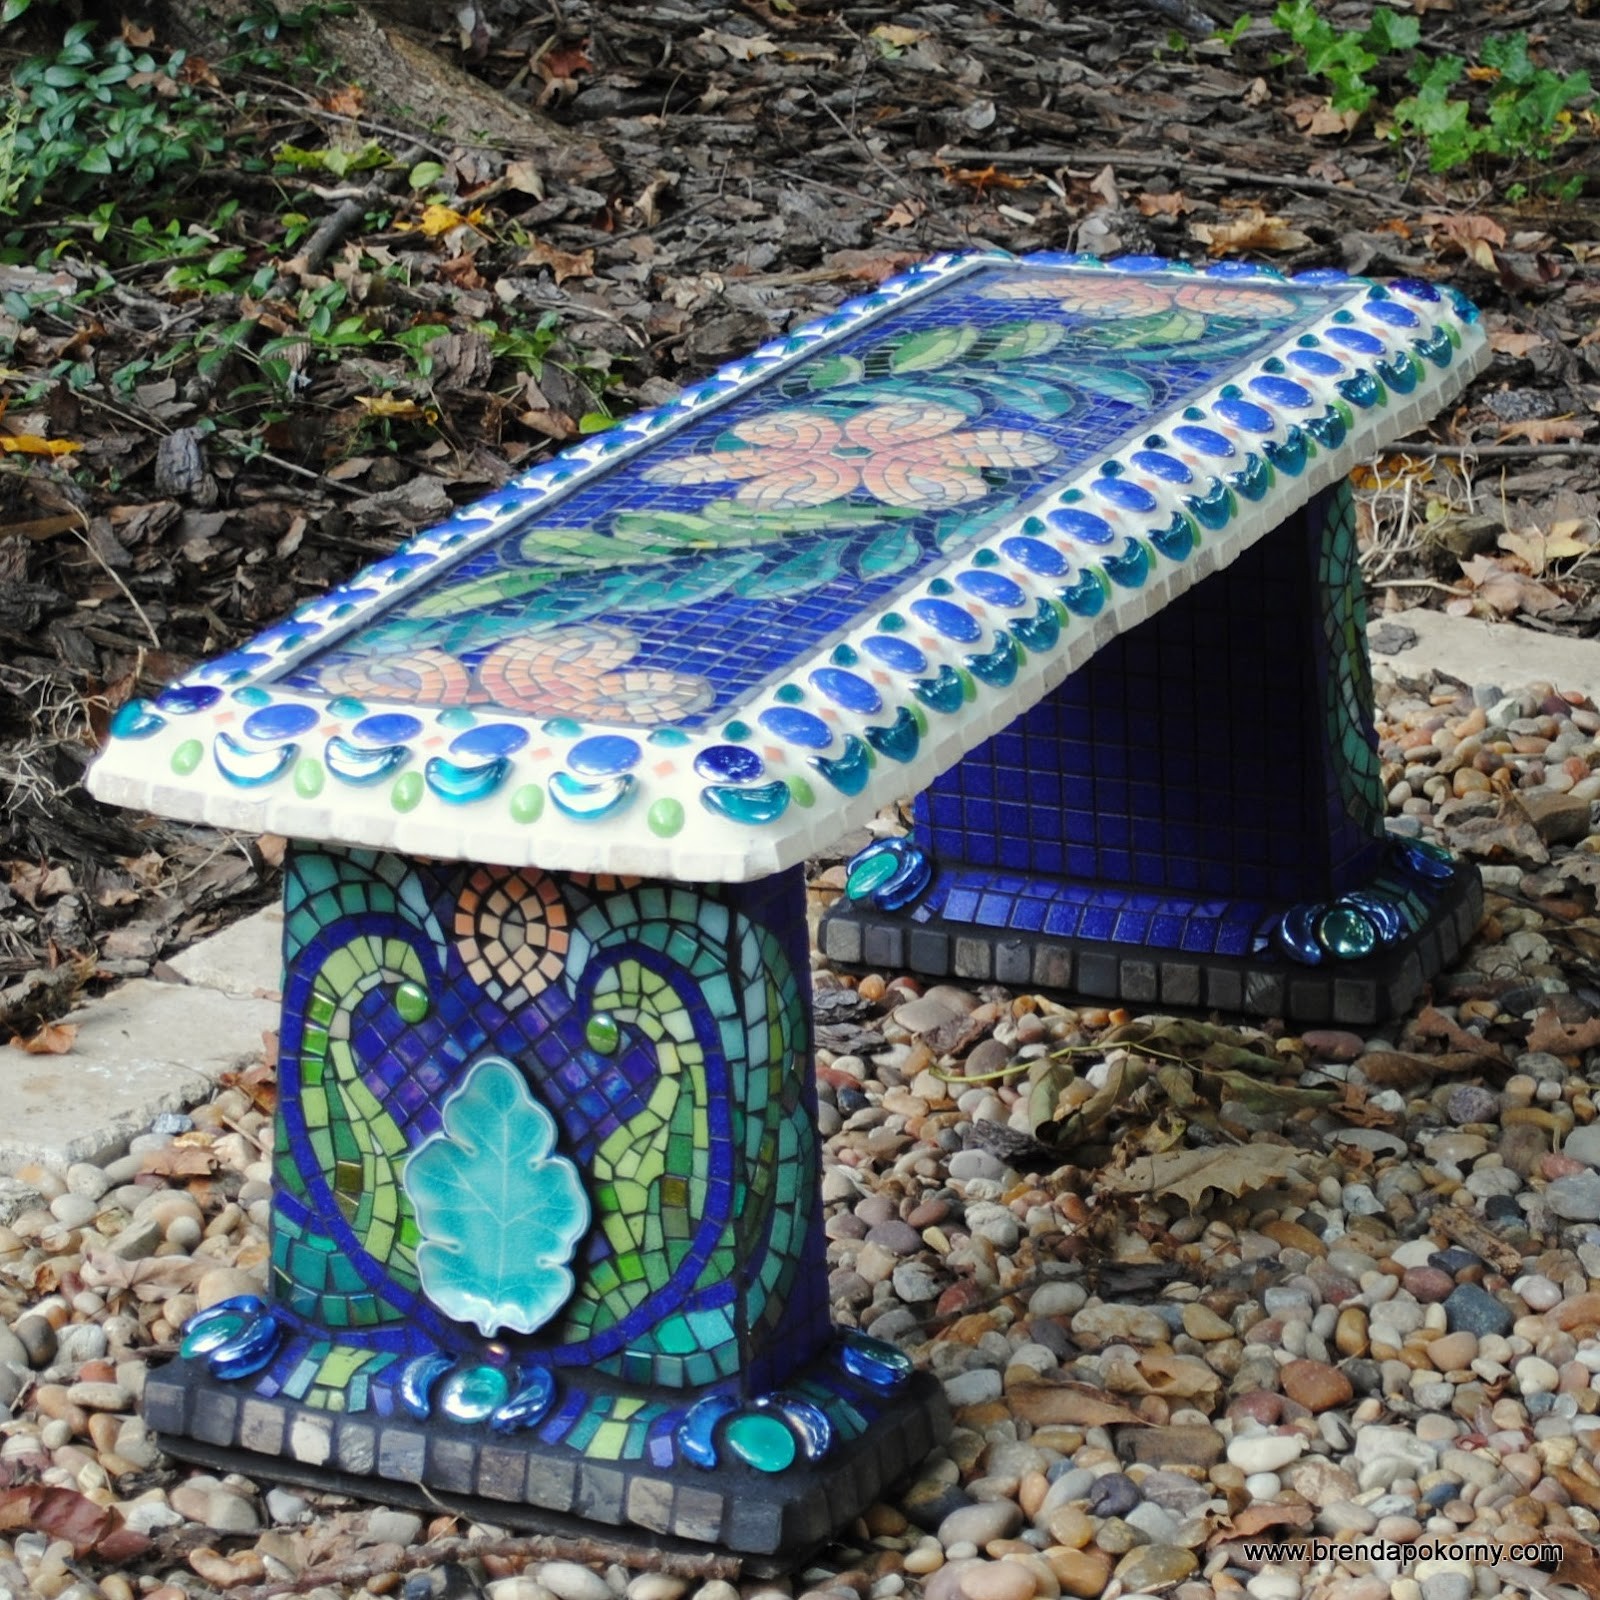 One of a kind mosaic garden bench custom